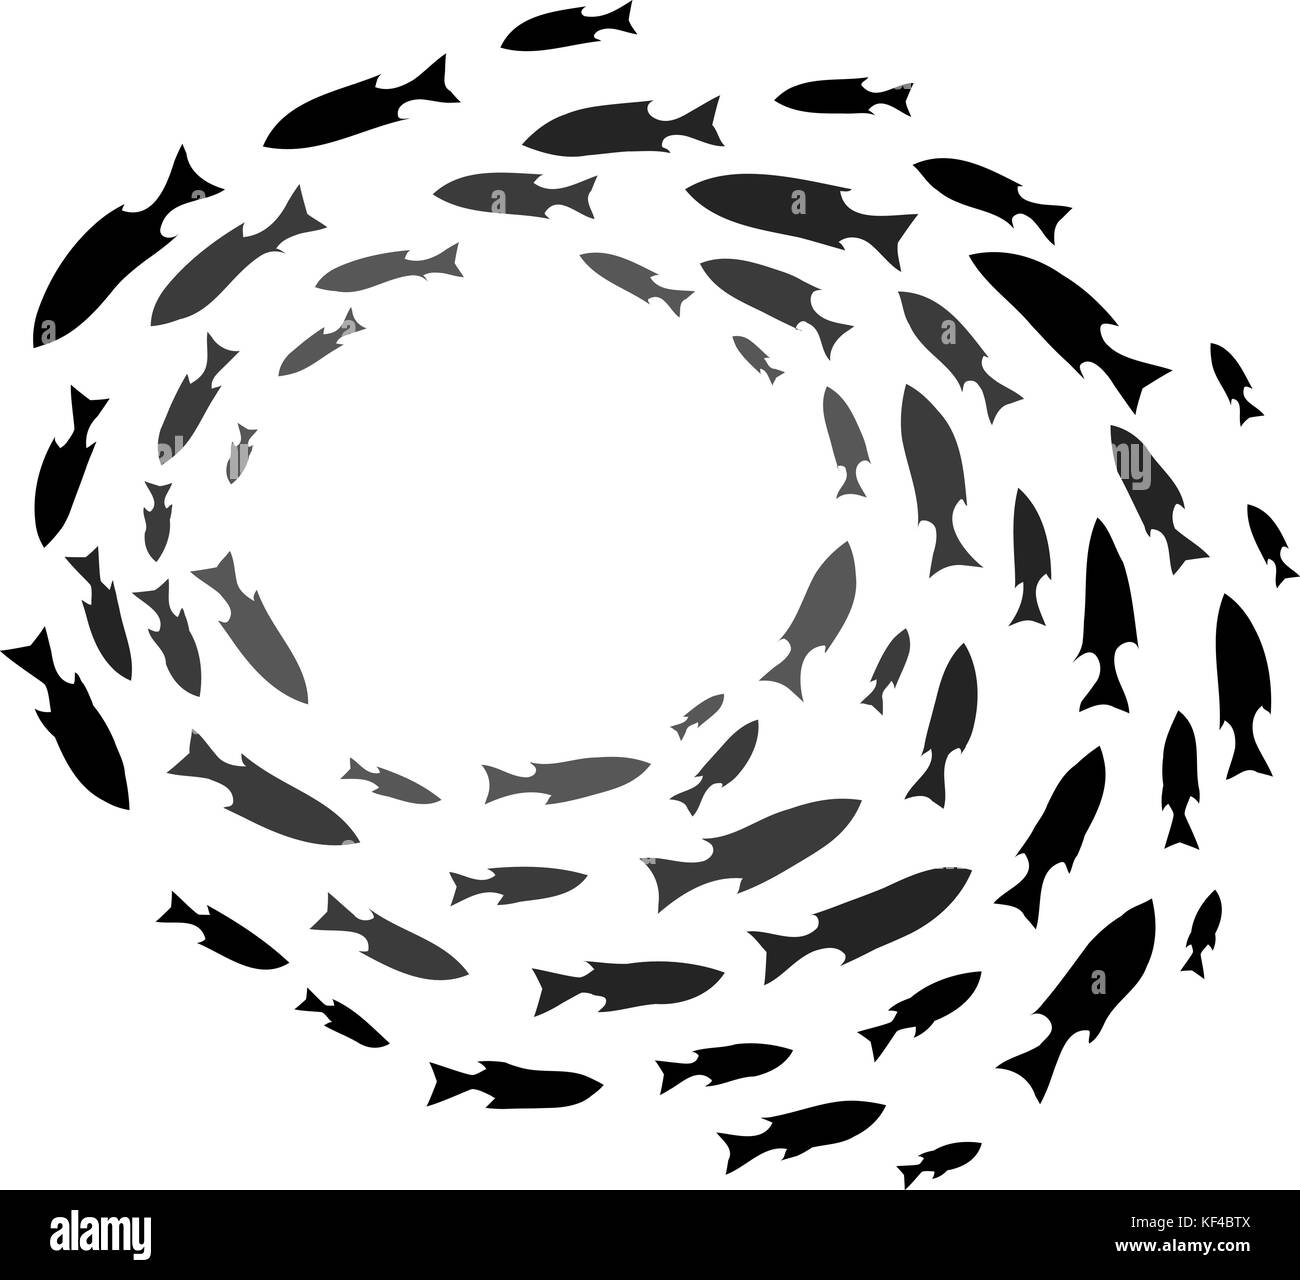 Shoal of fish. School of ocean fish silhouettes Stock Vector Image ...